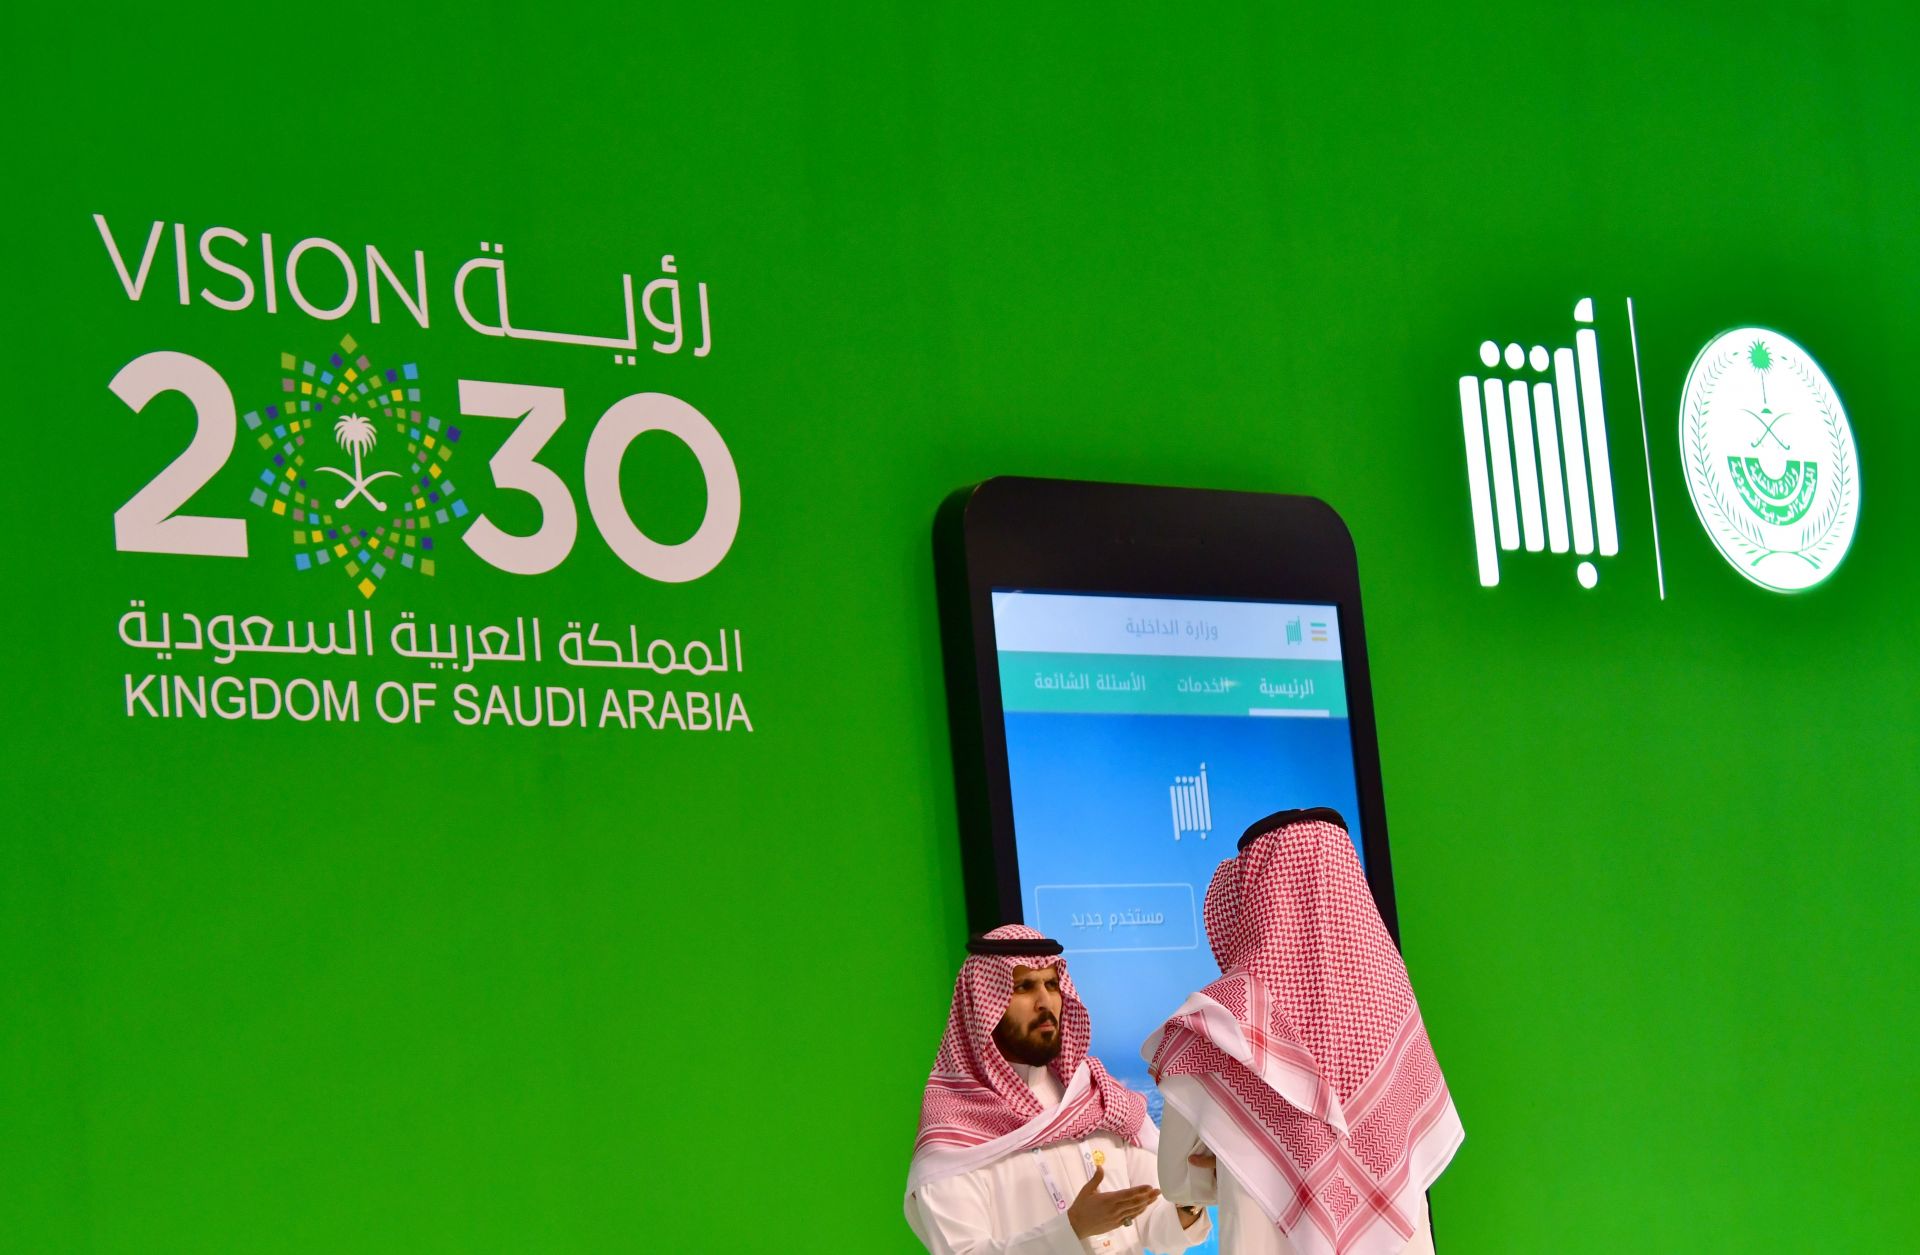 A display promotes Saudi Arabia's Vision 2030 economic reform campaign at the 2017 GITEX technology exhibition in Dubai, United Arab Emirates.